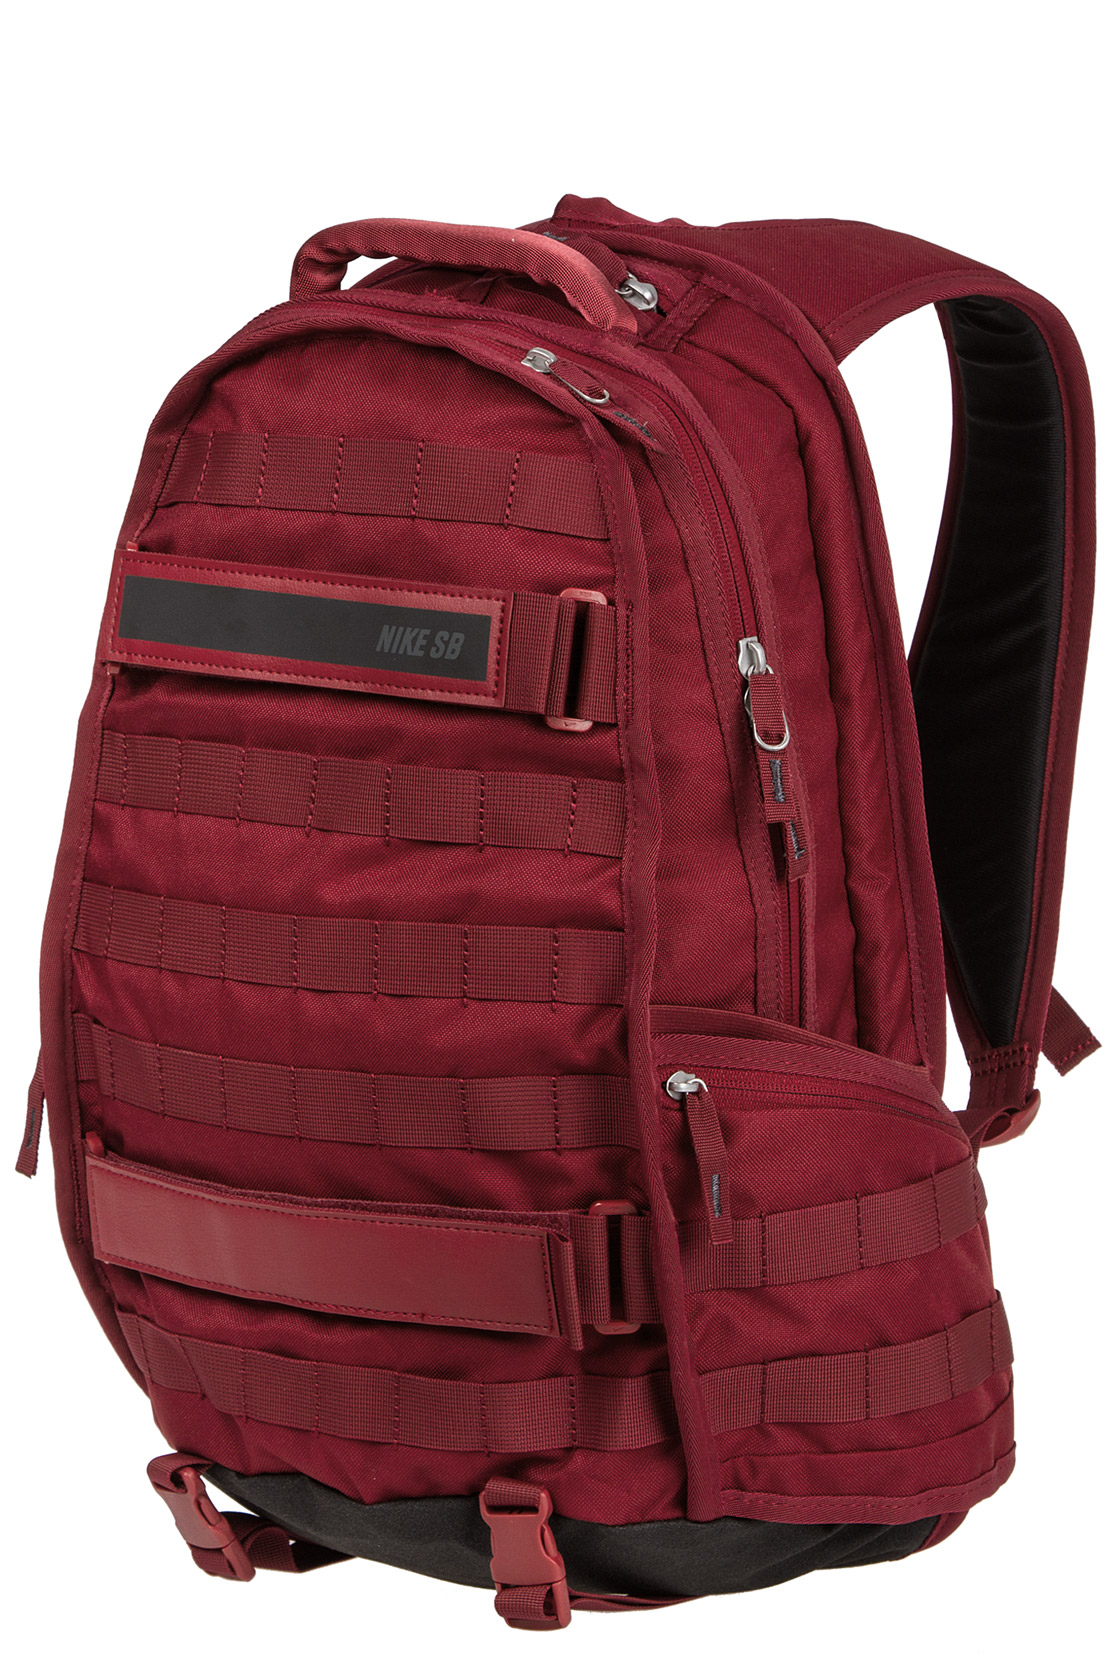 Nike SB RPM Backpack 26L (team red) buy at skatedeluxe